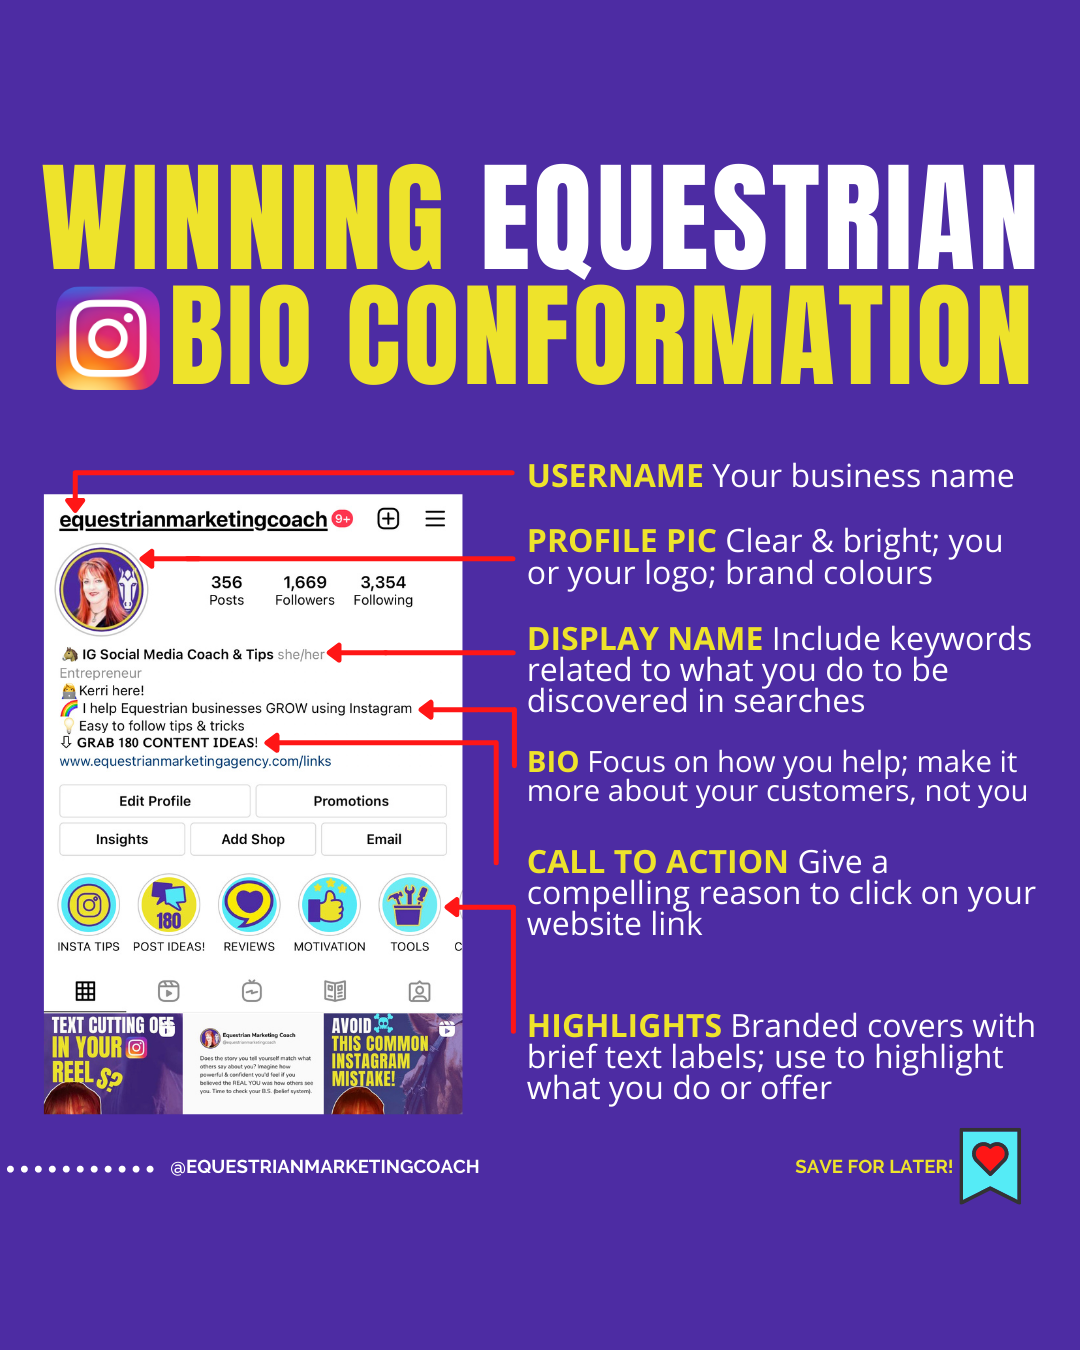 How to create a winning Instagram Bio